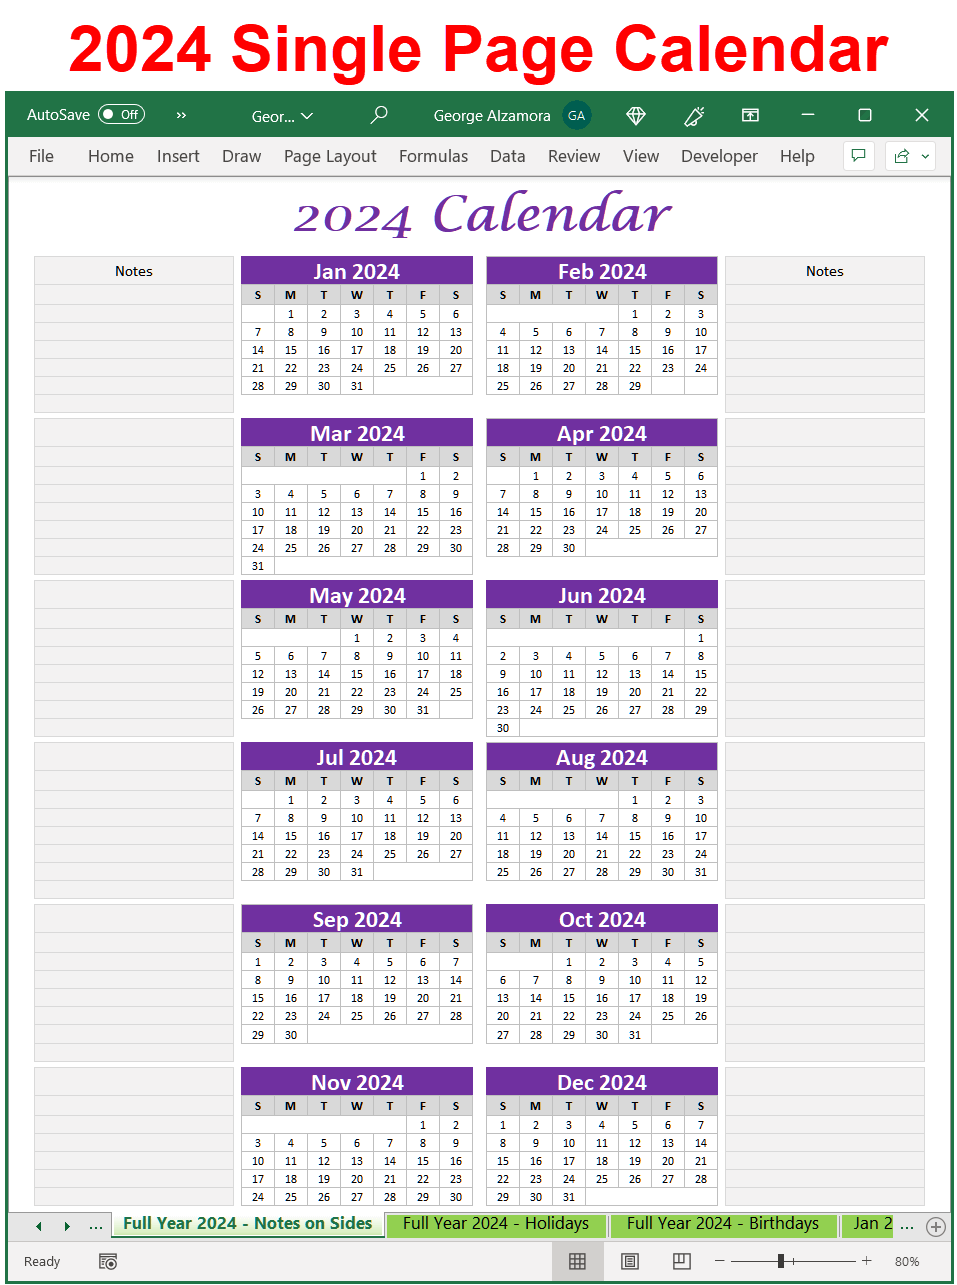 Year 2024 Single Page Calendar